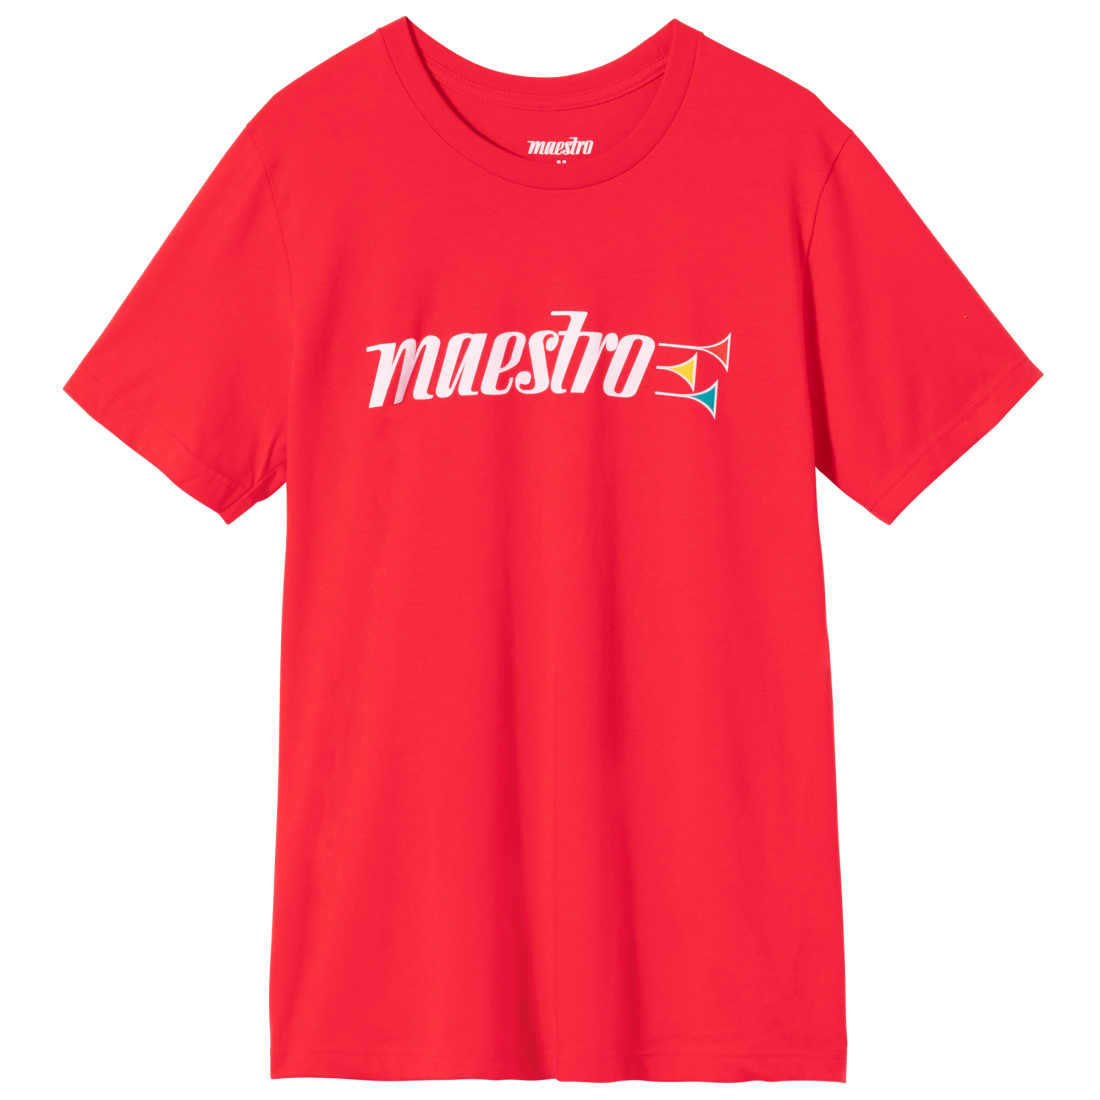 T-shirt Maestro  logo trompettes, rouge (grand)